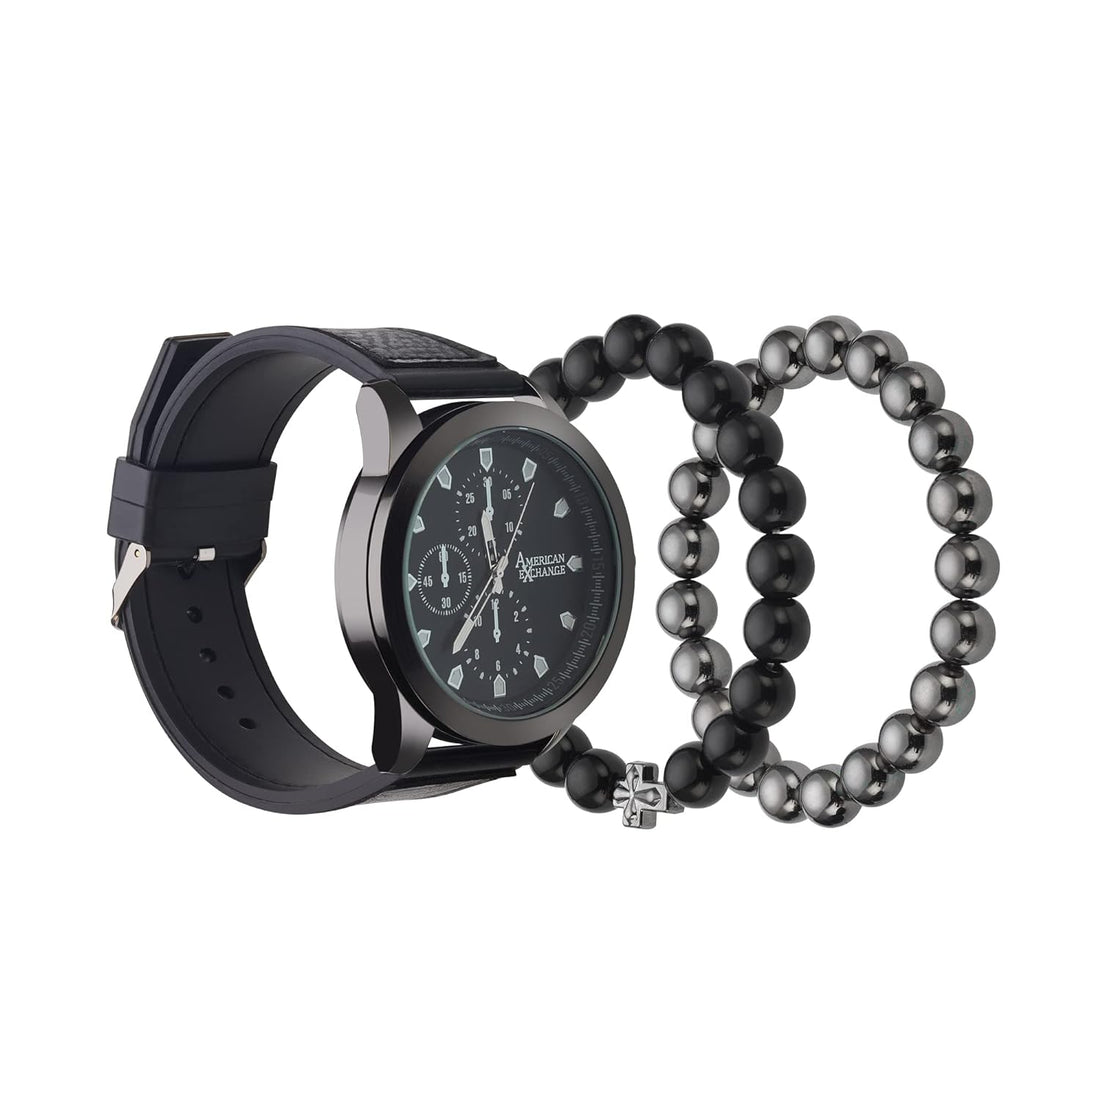 American Exchange Men's Quartz Movement Black/Matte Black Analog Watch and Stackable Bracelet Set with Zippered Pouch, Black/Matte Black, Medium, Classic